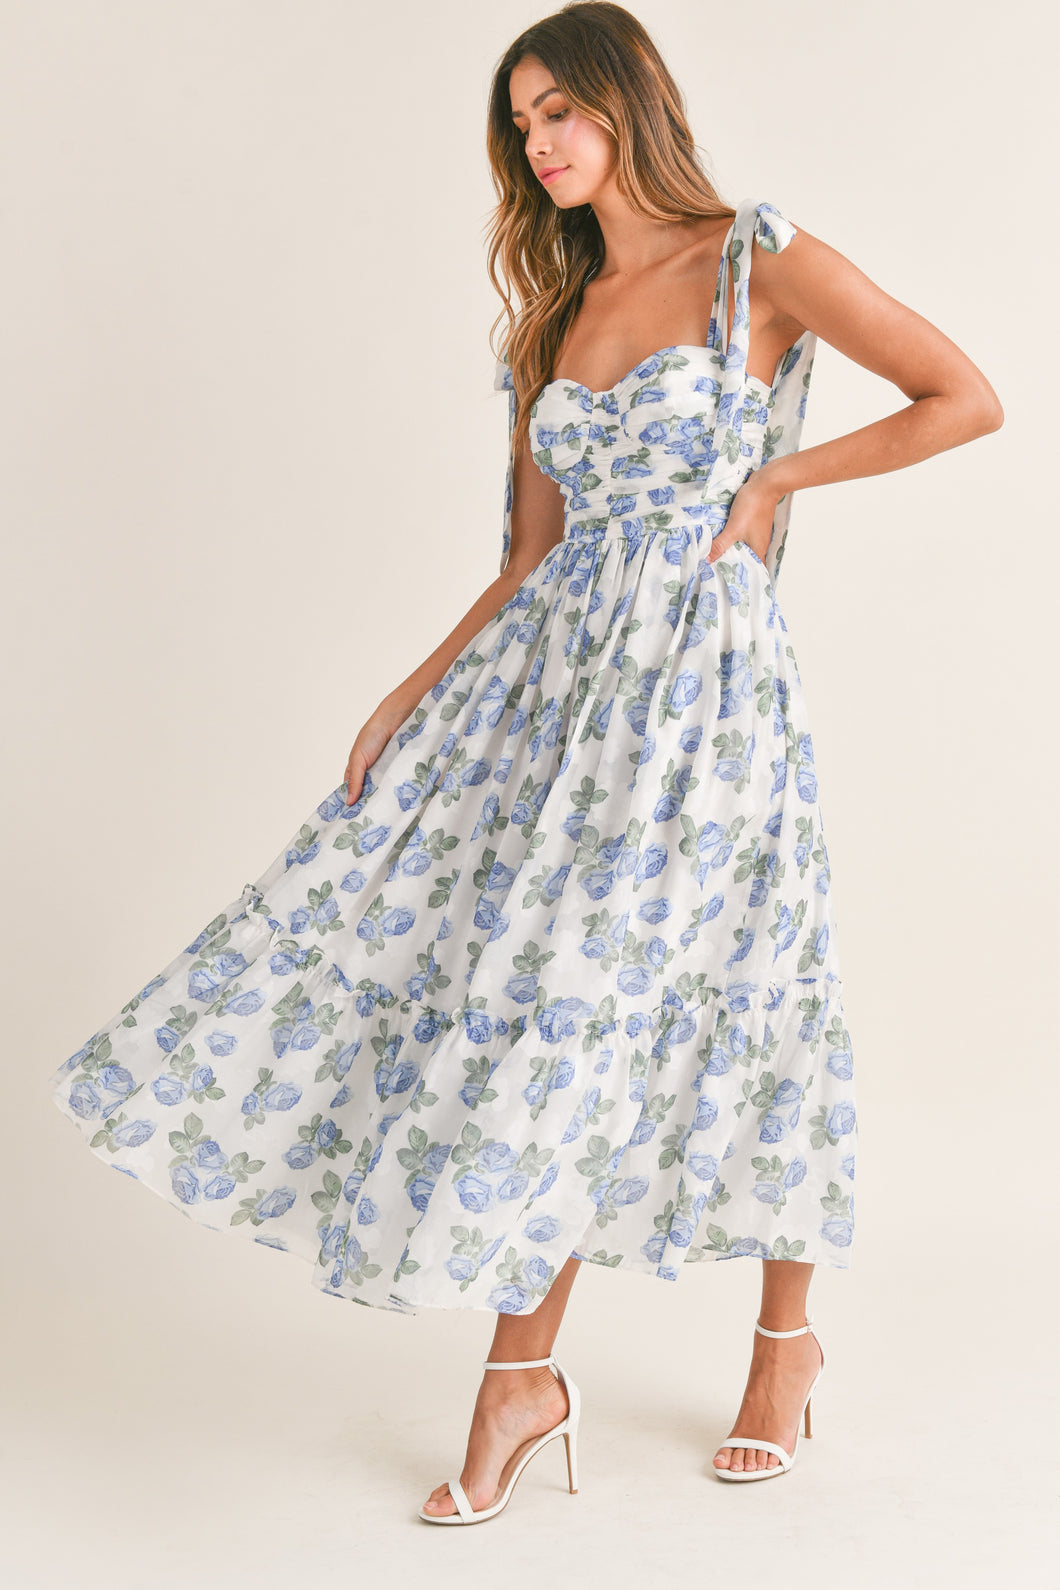 Winnie Flowy Blue Floral Sweetheart Maxi Dress